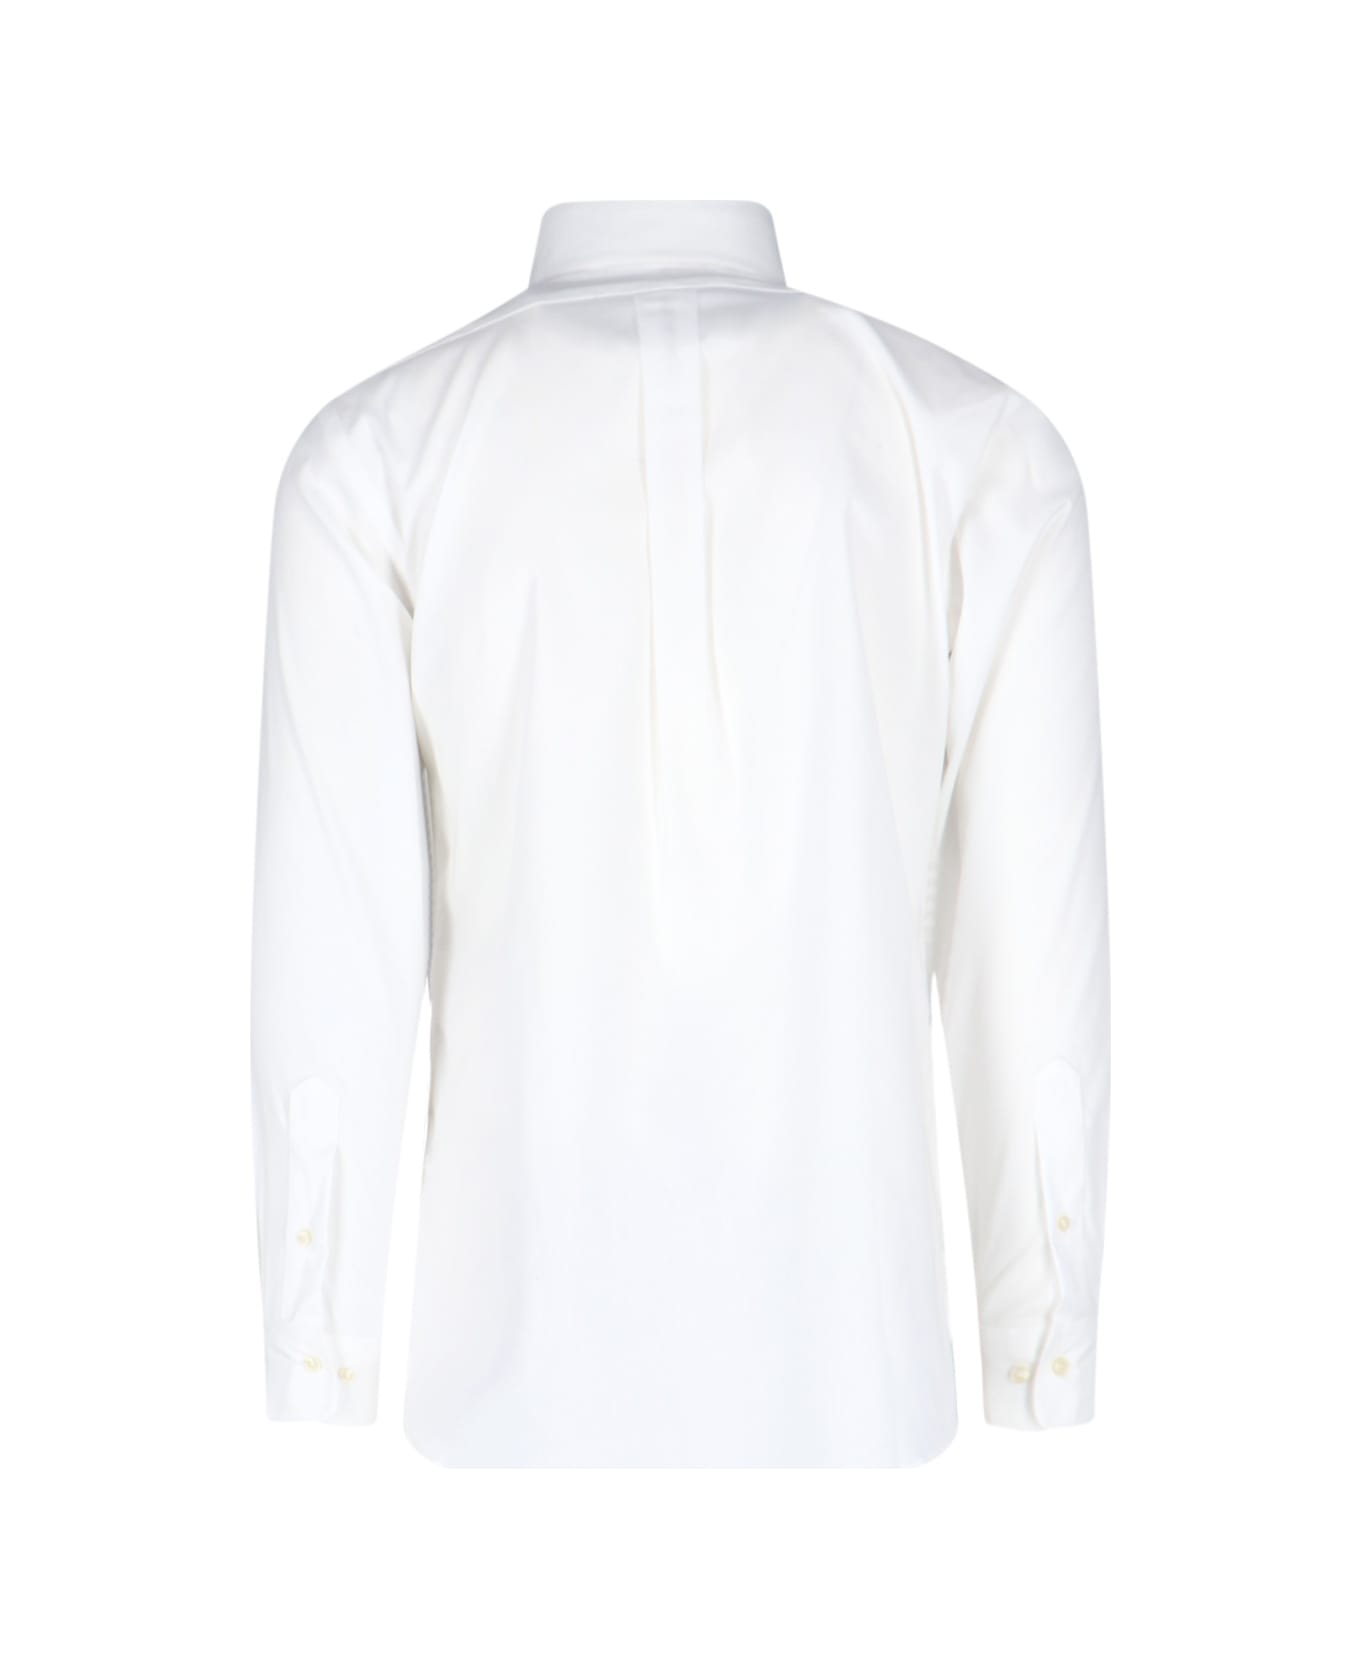 Polo Ralph Lauren Oxford Shirt - White シャツ